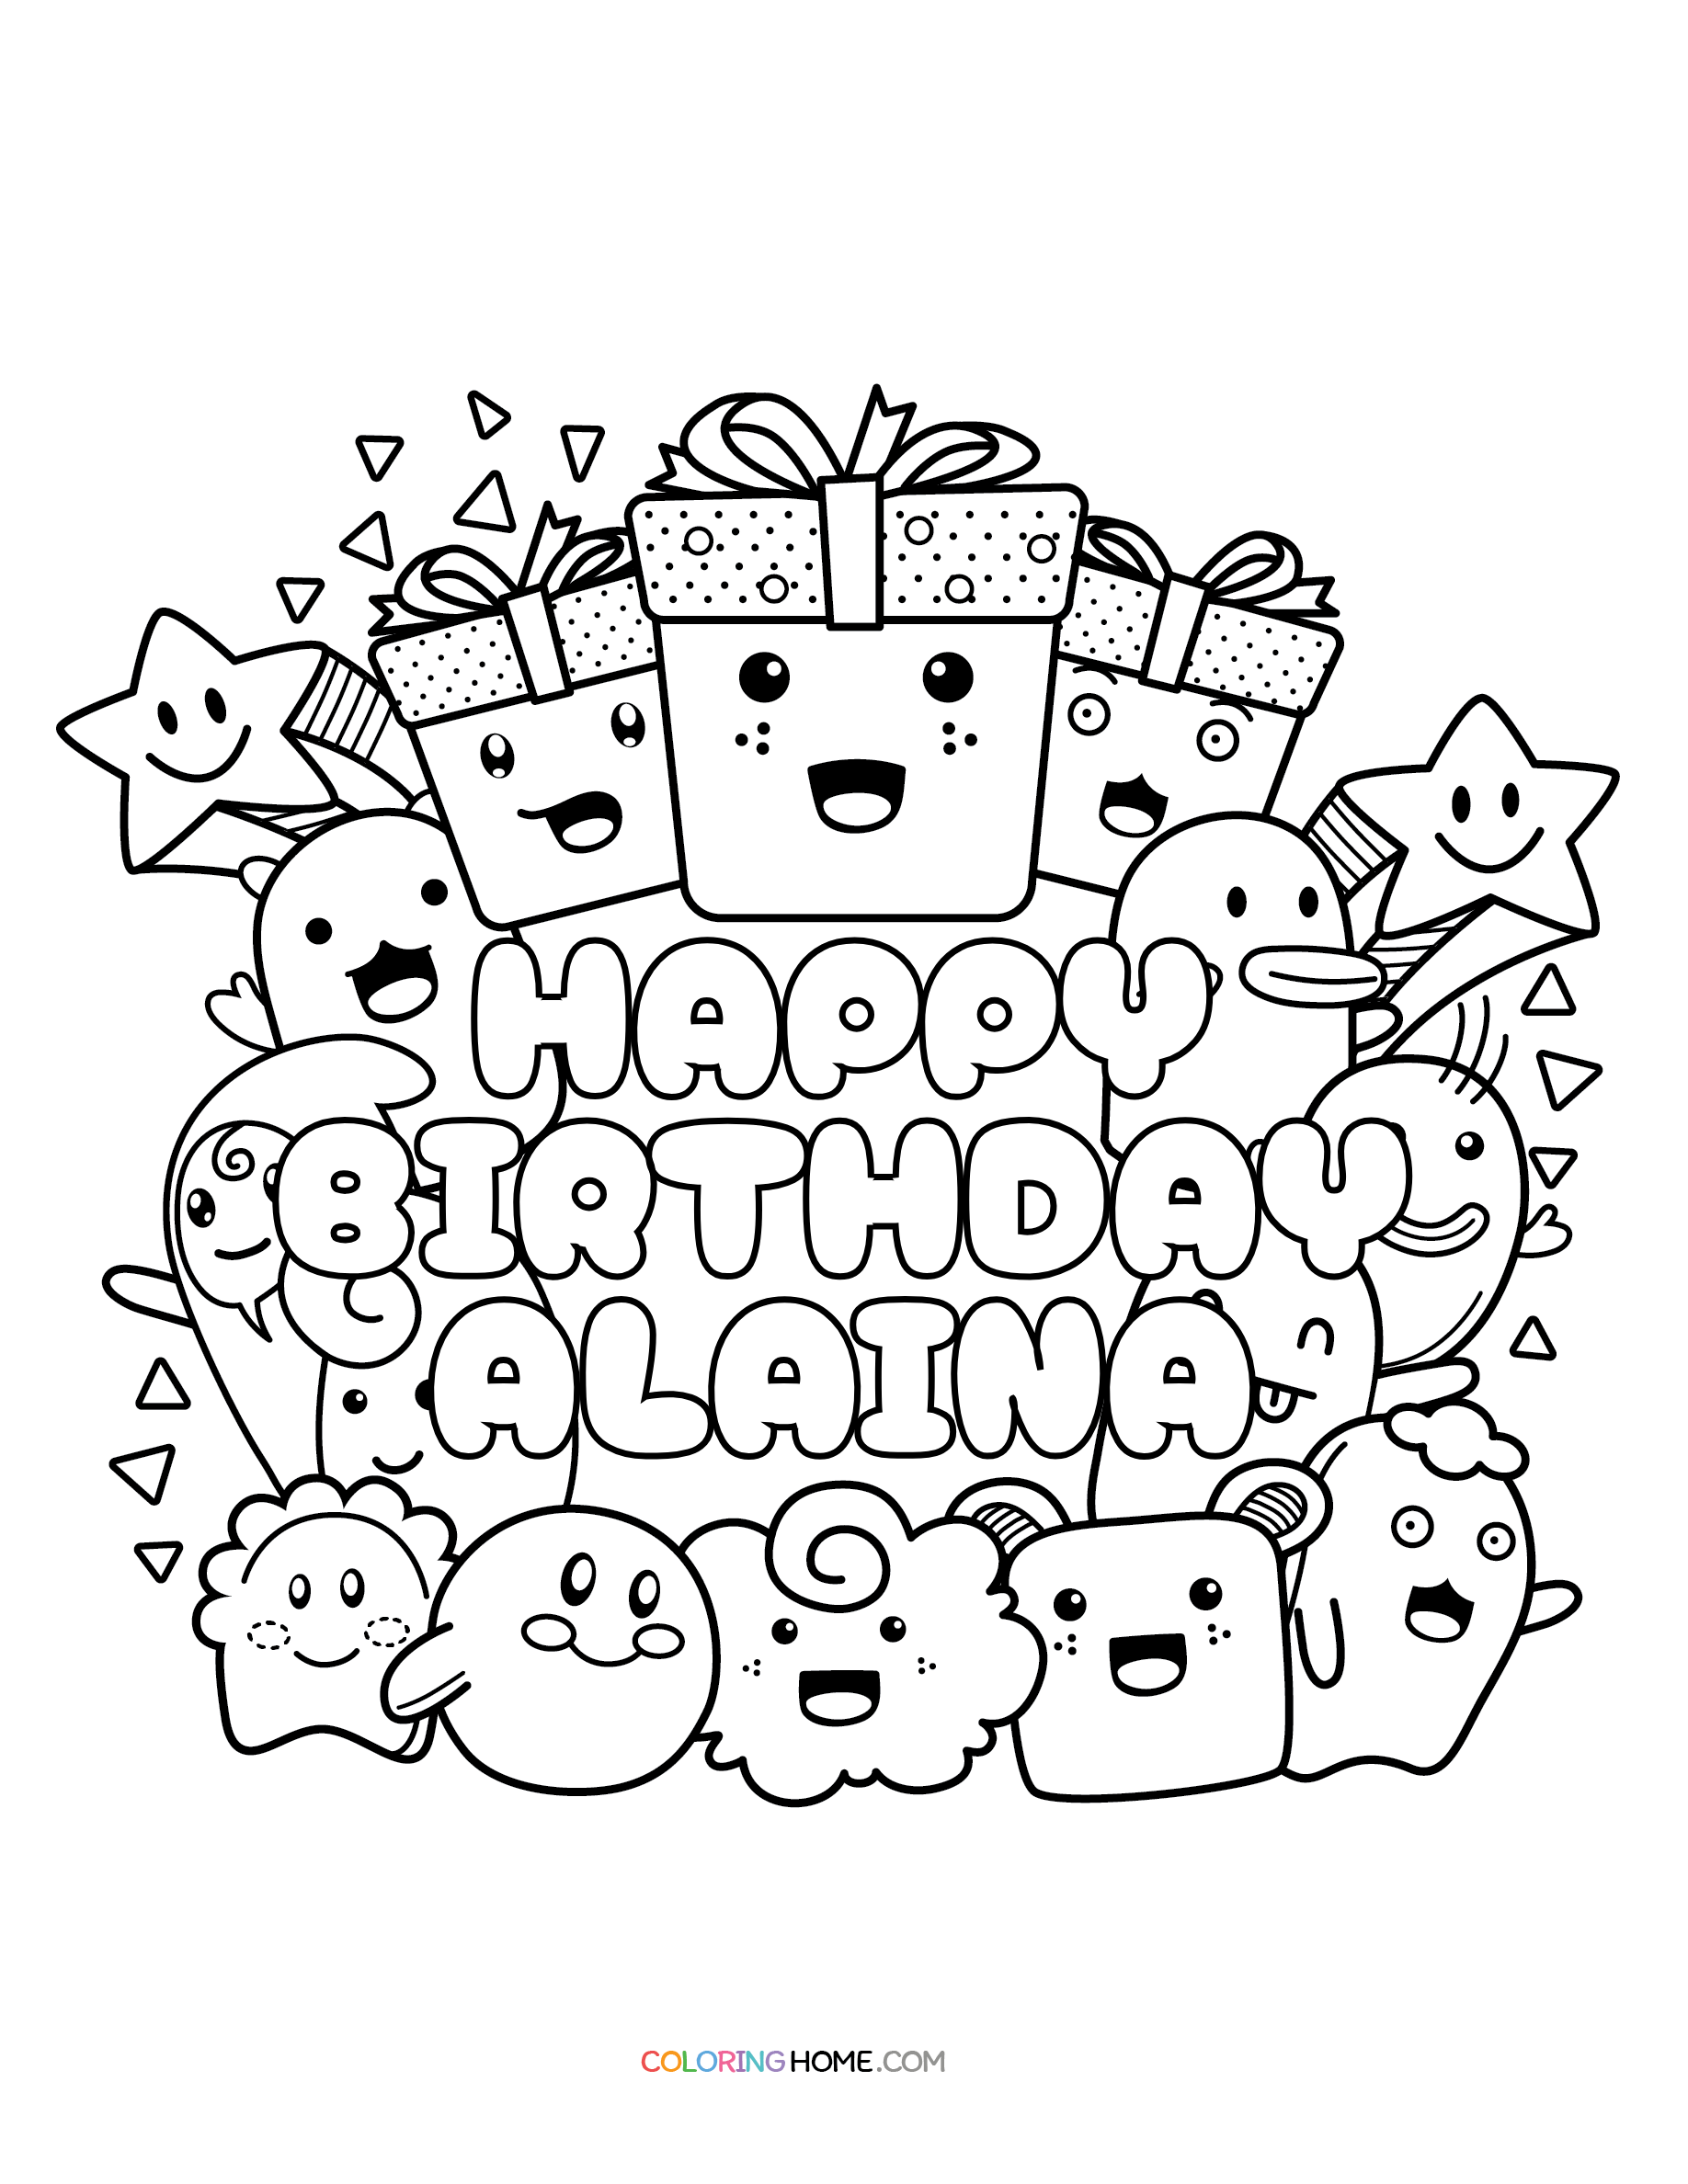 Happy Birthday Alaina coloring page